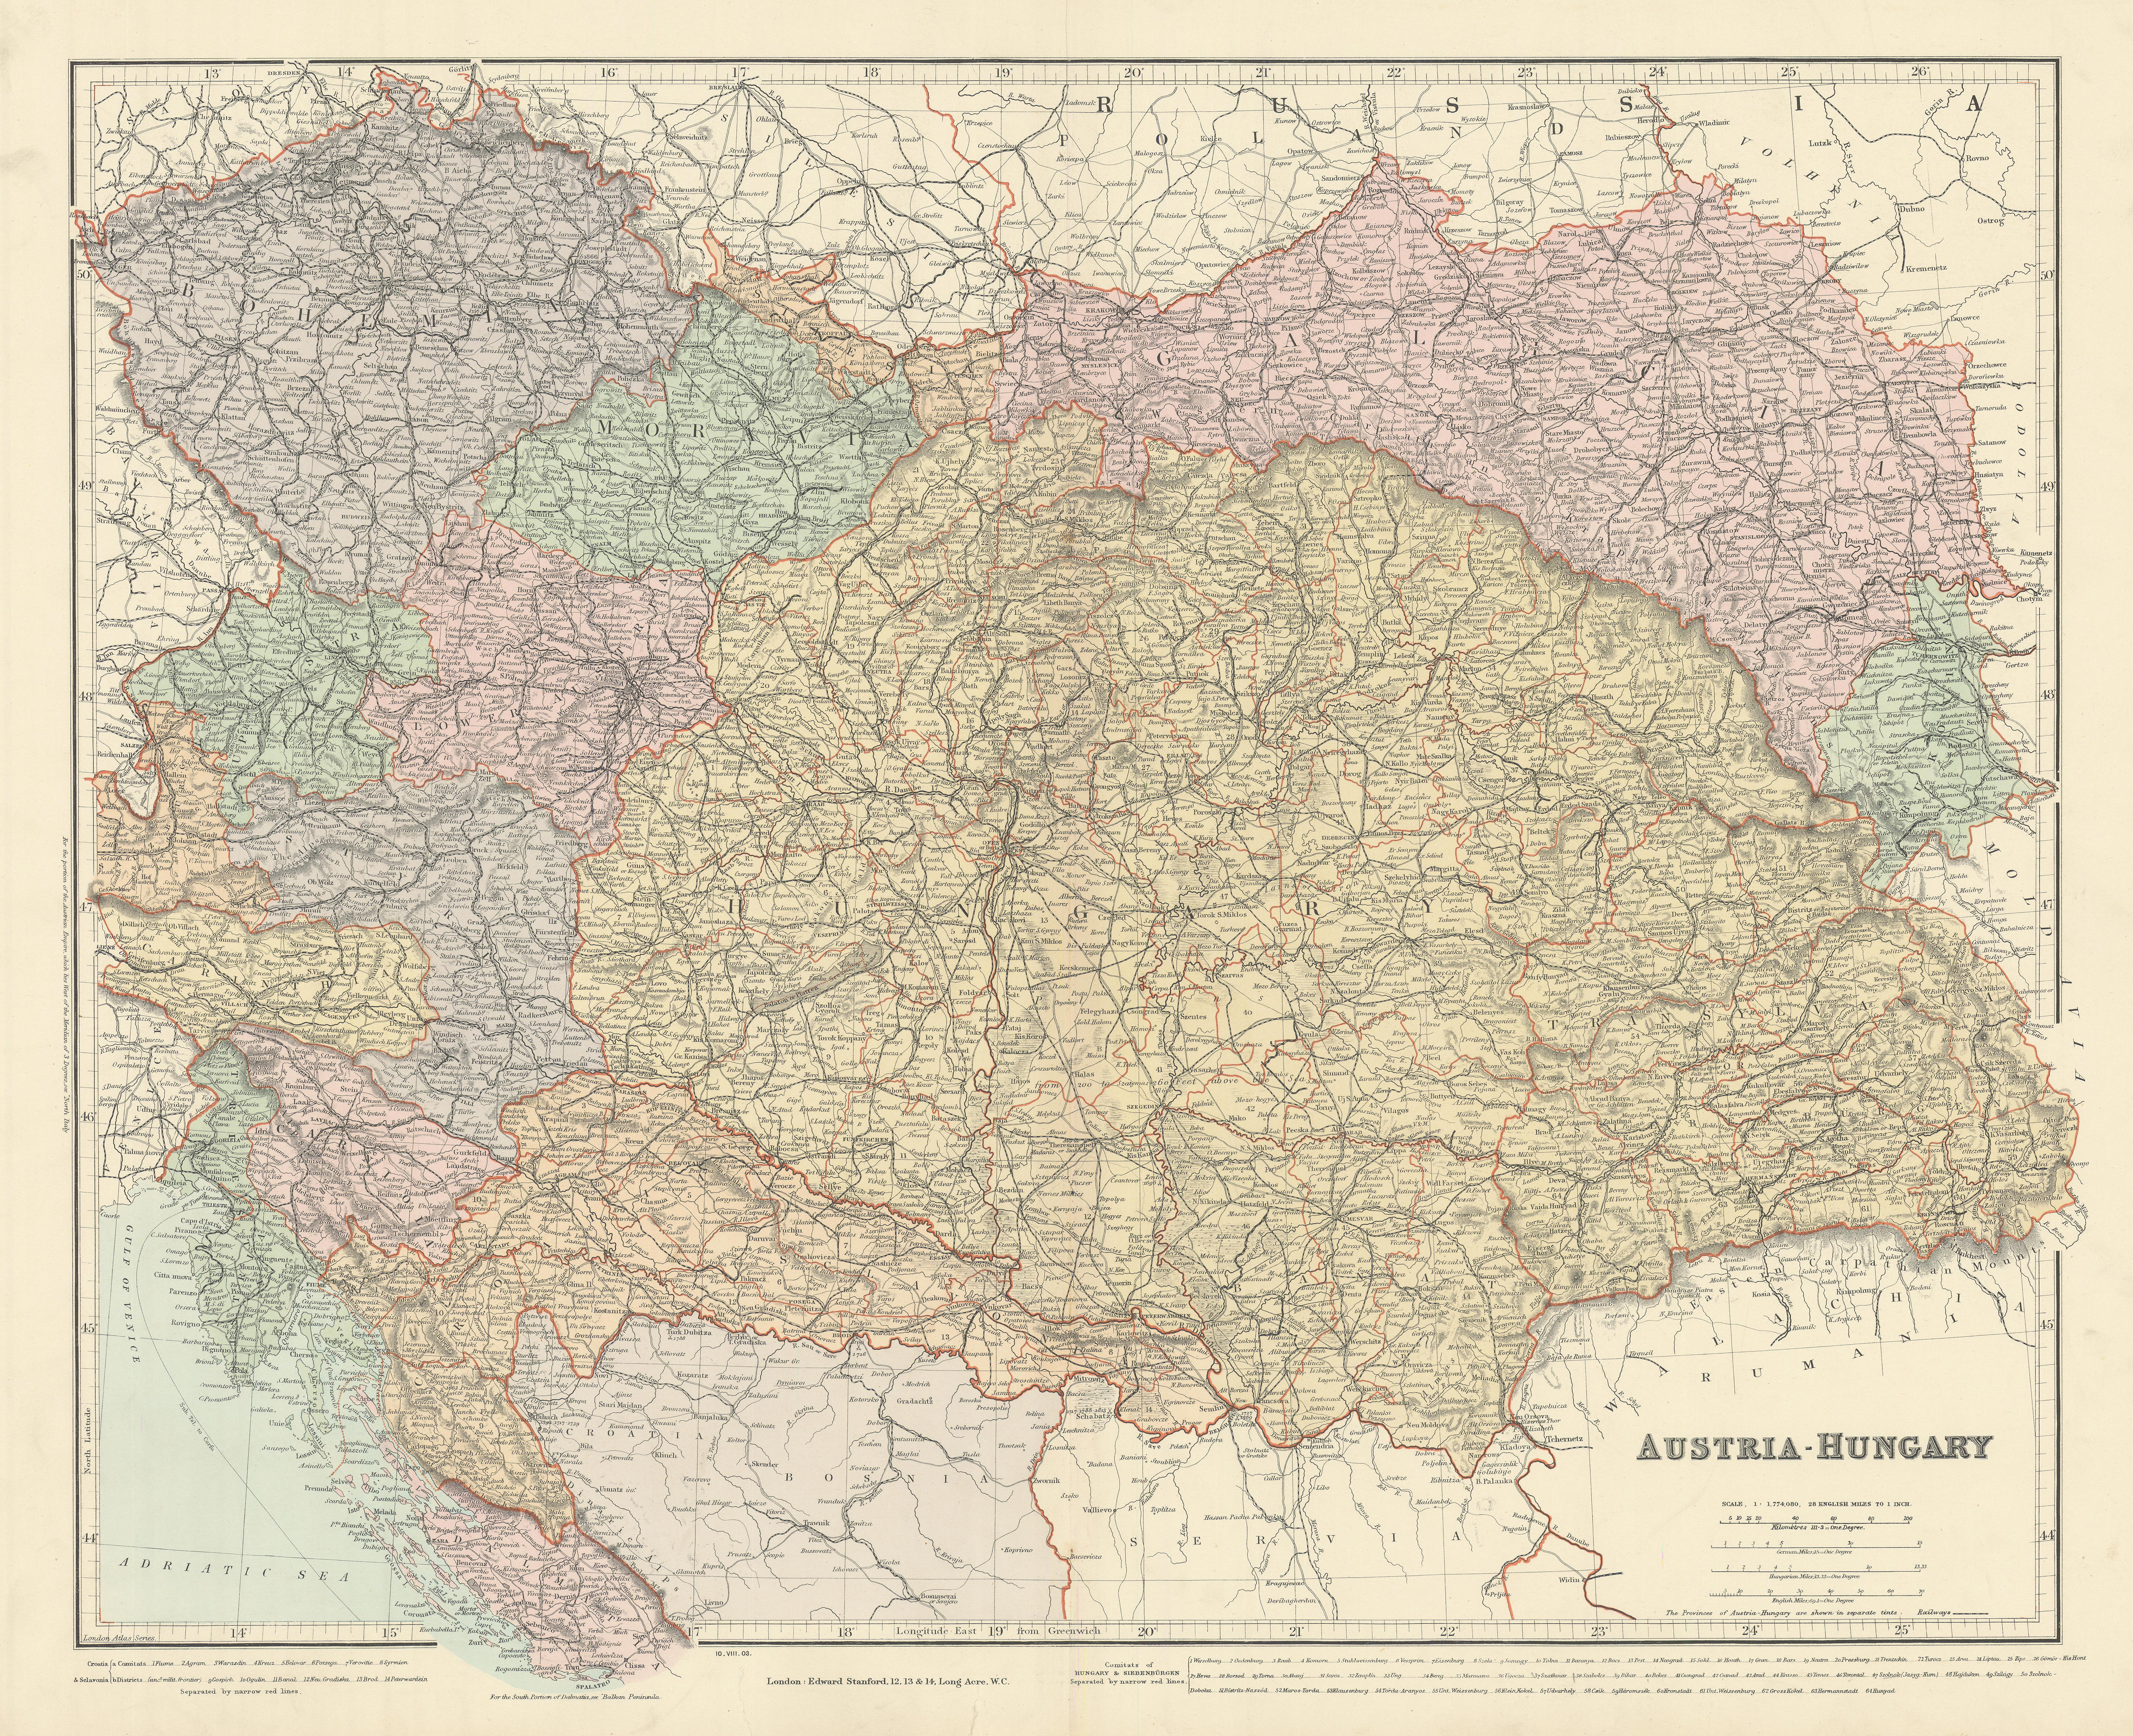 Associate Product Austria-Hungary. Croatia Czechia Bohemia Galicia Transylvania. STANFORD 1904 map